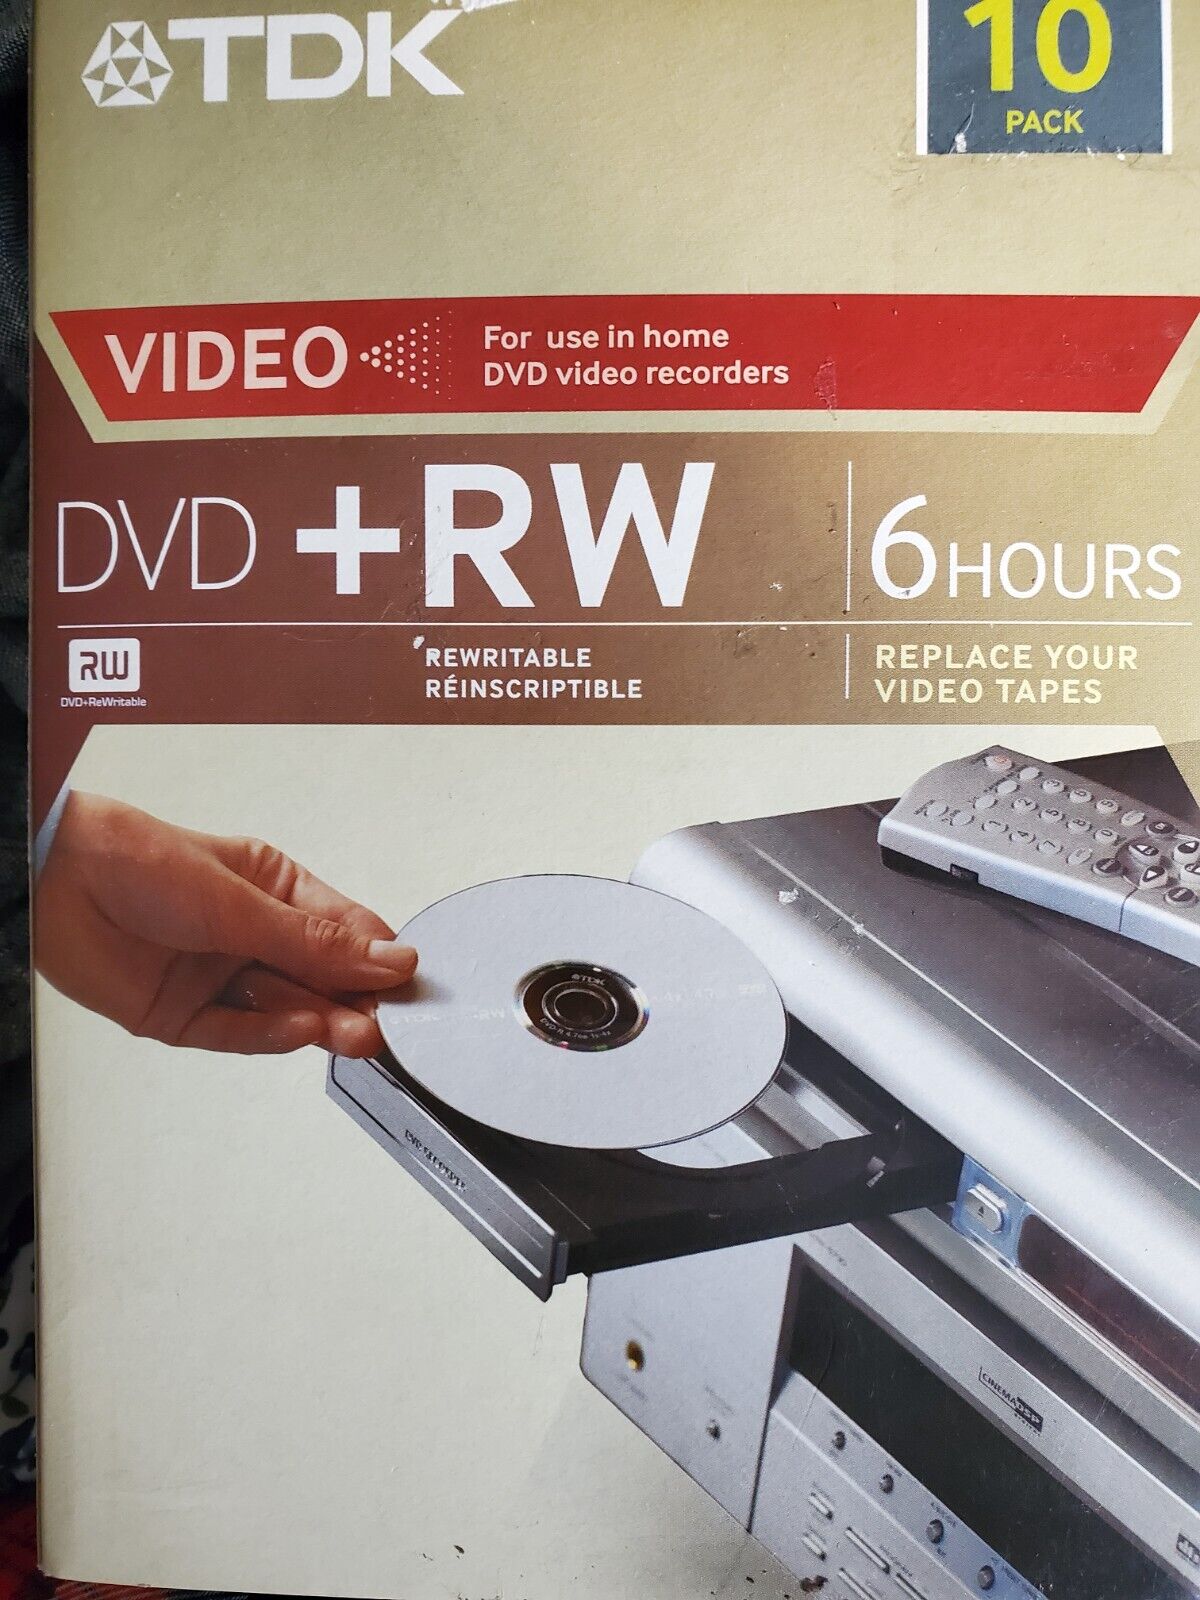 NEW TDK DVD -RW 10 Pack 1.4x 4.7 GB/GO Rewritable Discs 6 Hours Video